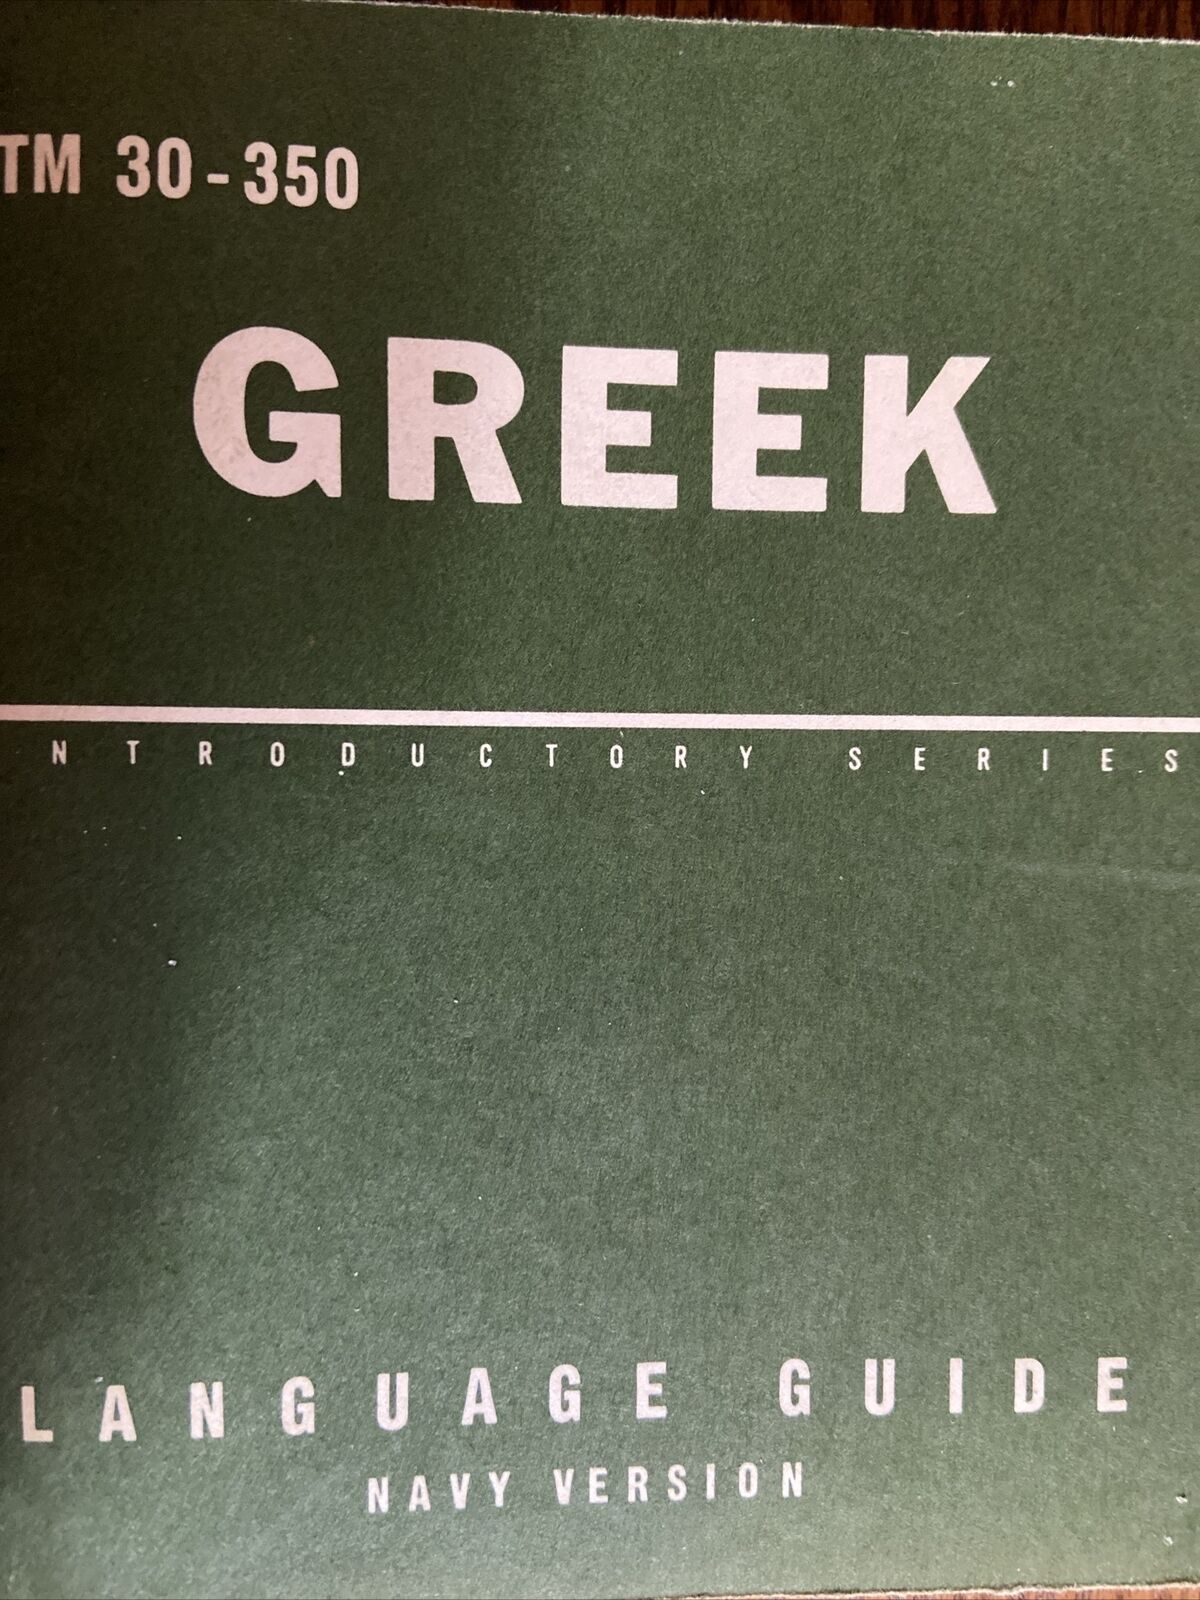 Greek Phrase Book TM 30-650 Language Guide Paperback 1963 US Navy Personnel